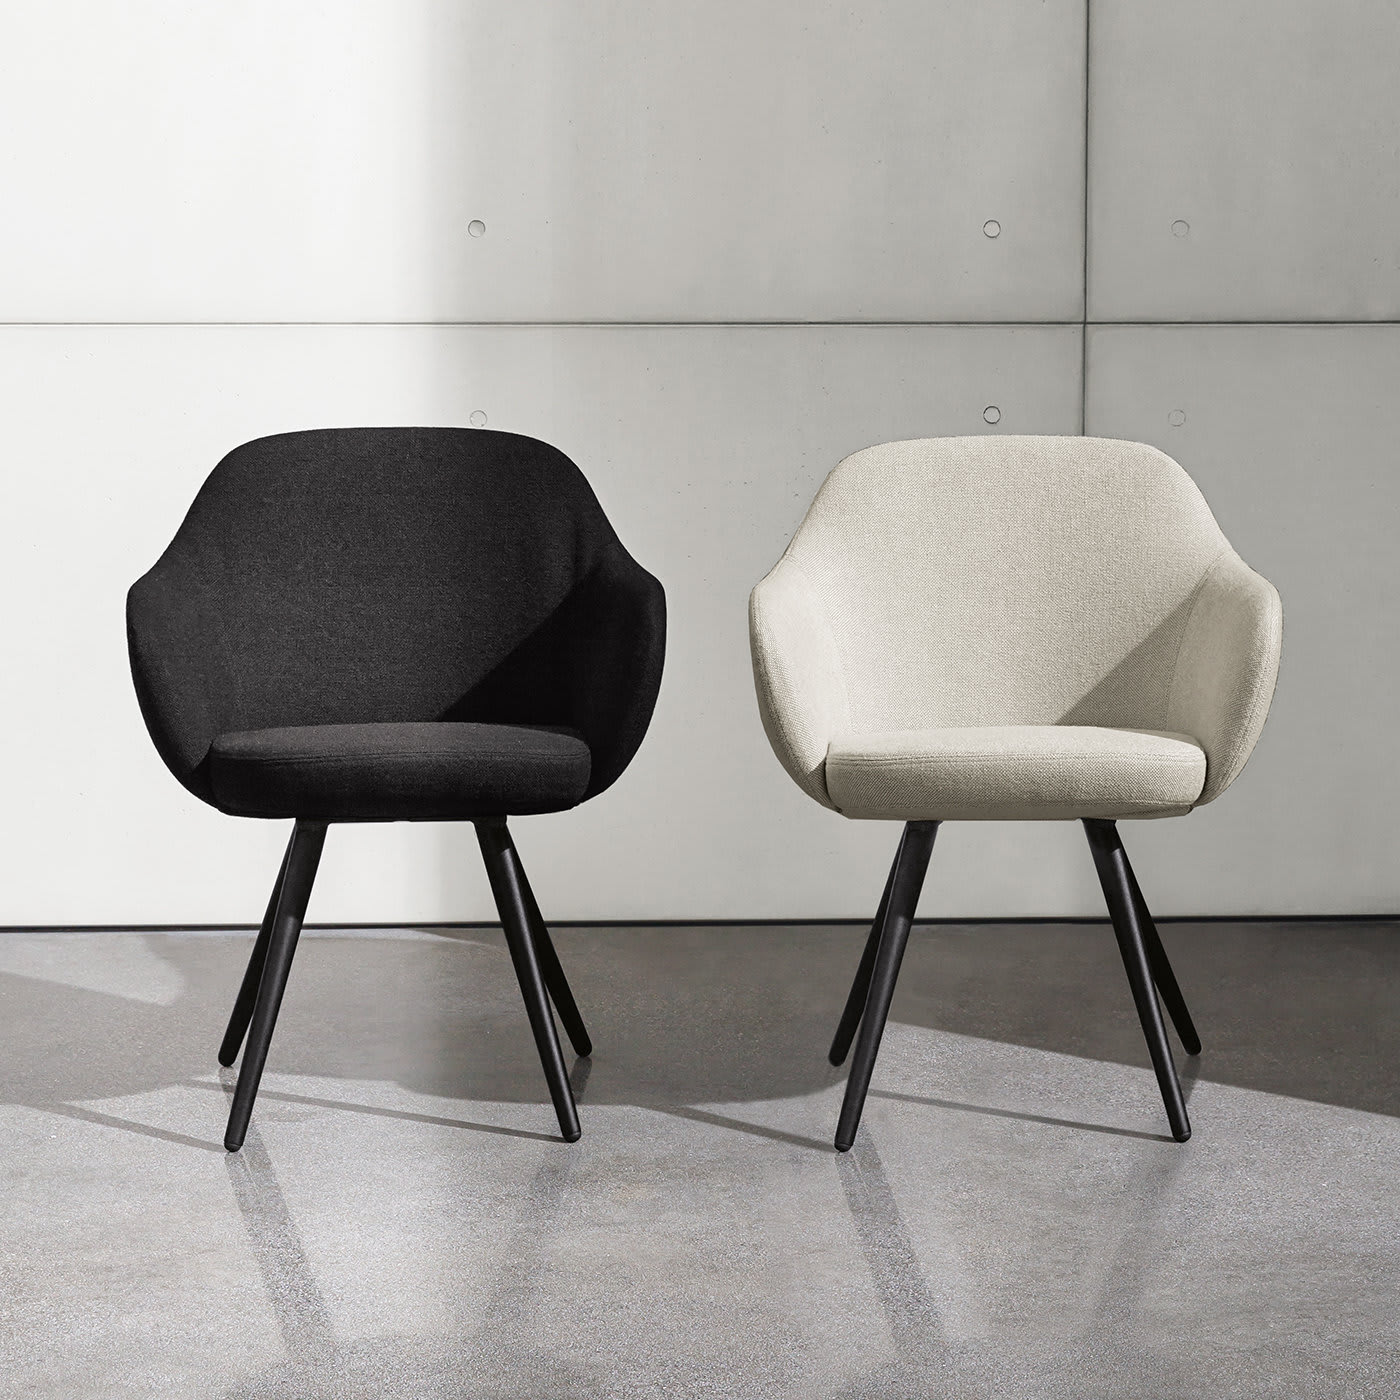 Cadira Cone-Shaped Black Chair with Armrests - Società Vetraria Trevigiana